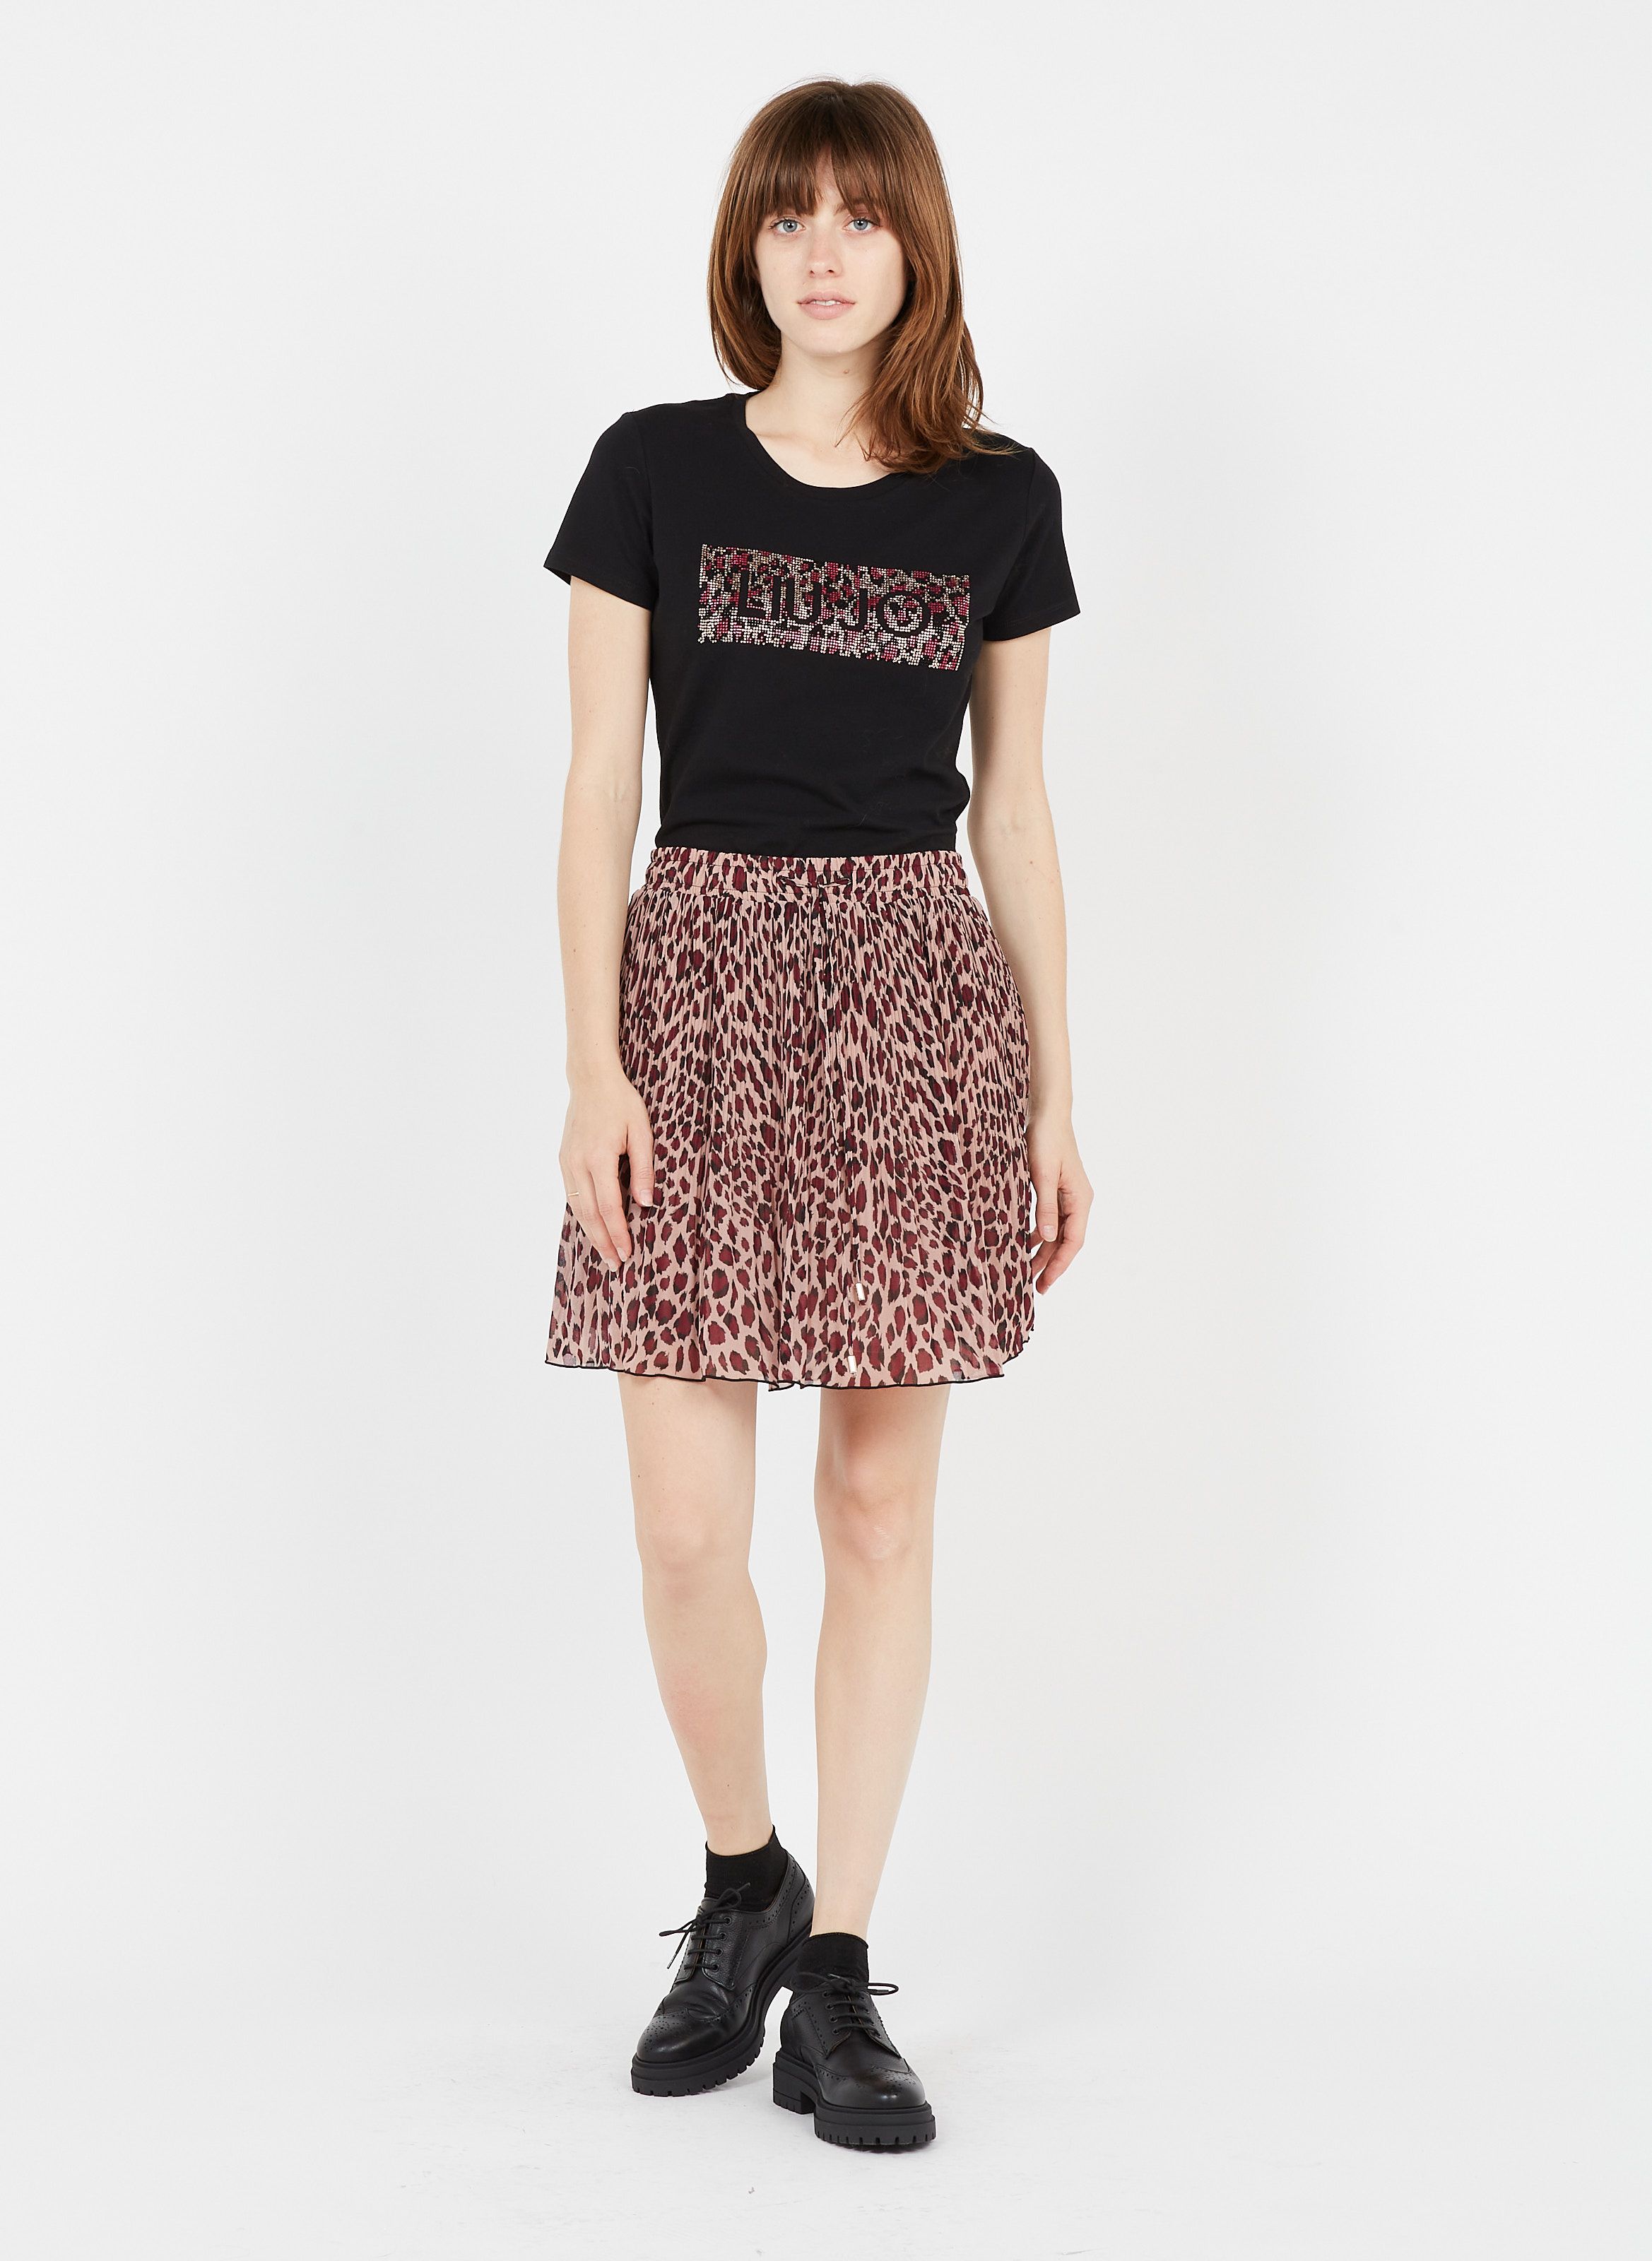 leopard print skirt for sale